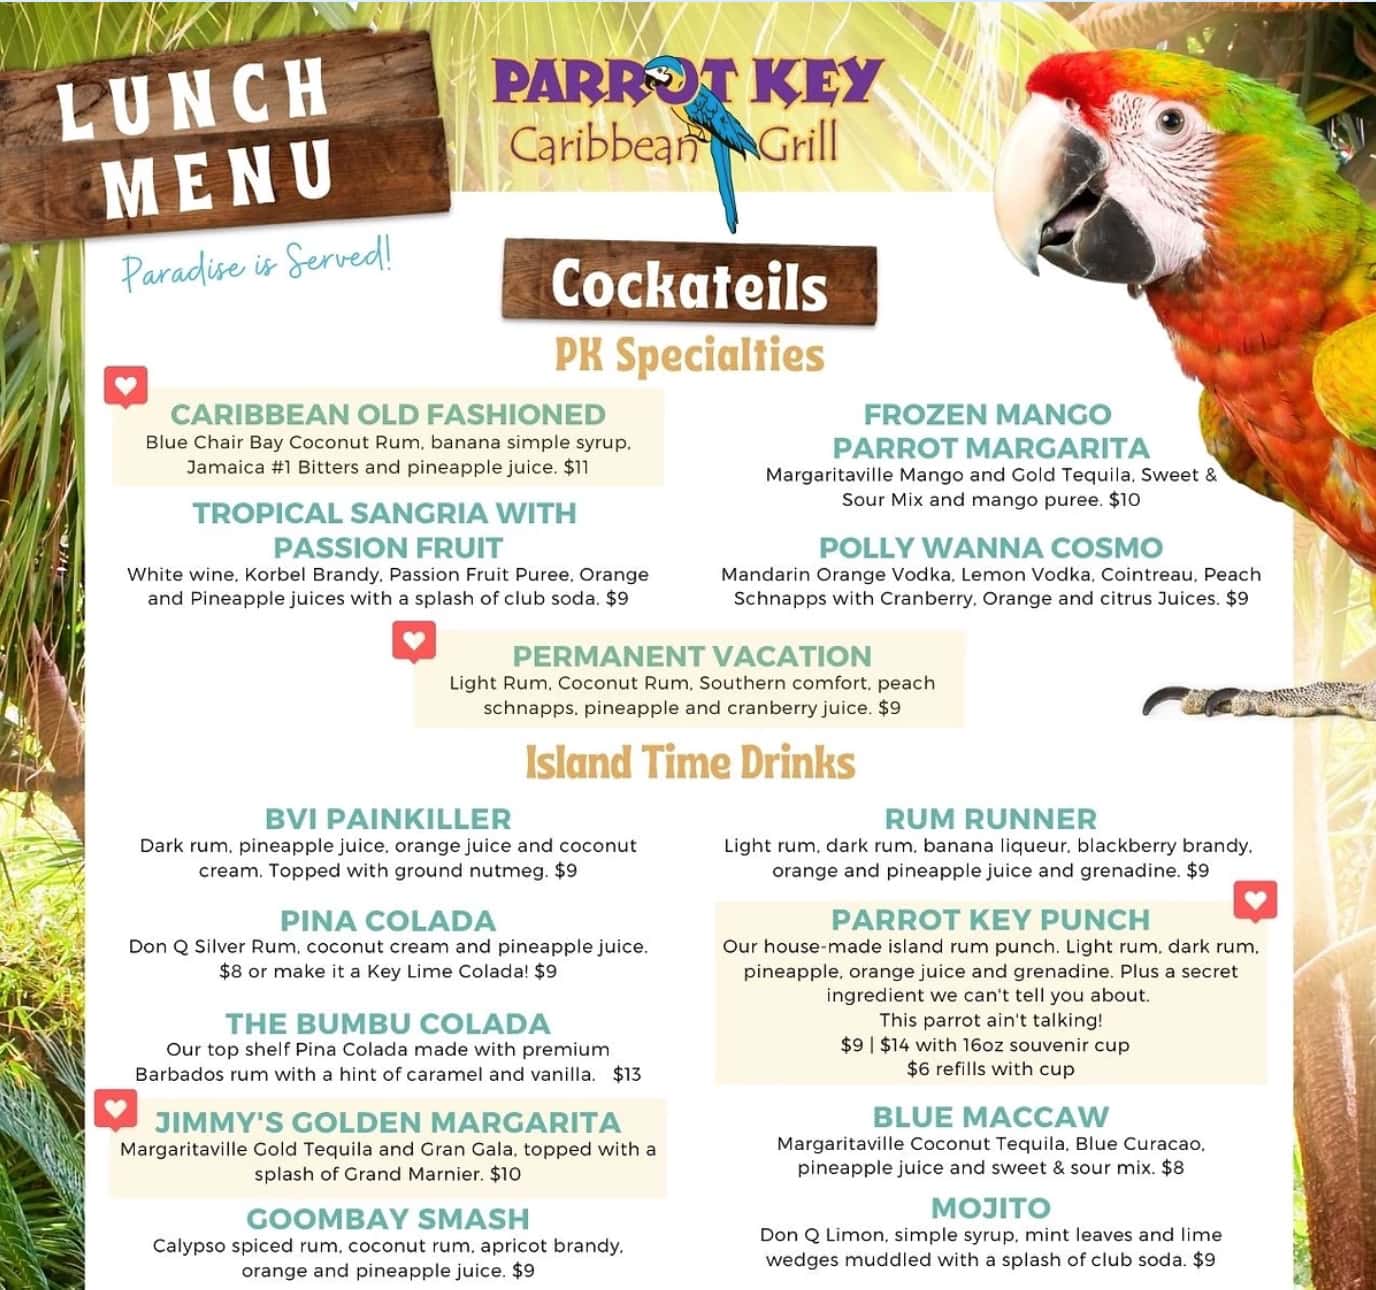 Parrot Key Caribbean Grill Lunch Menu